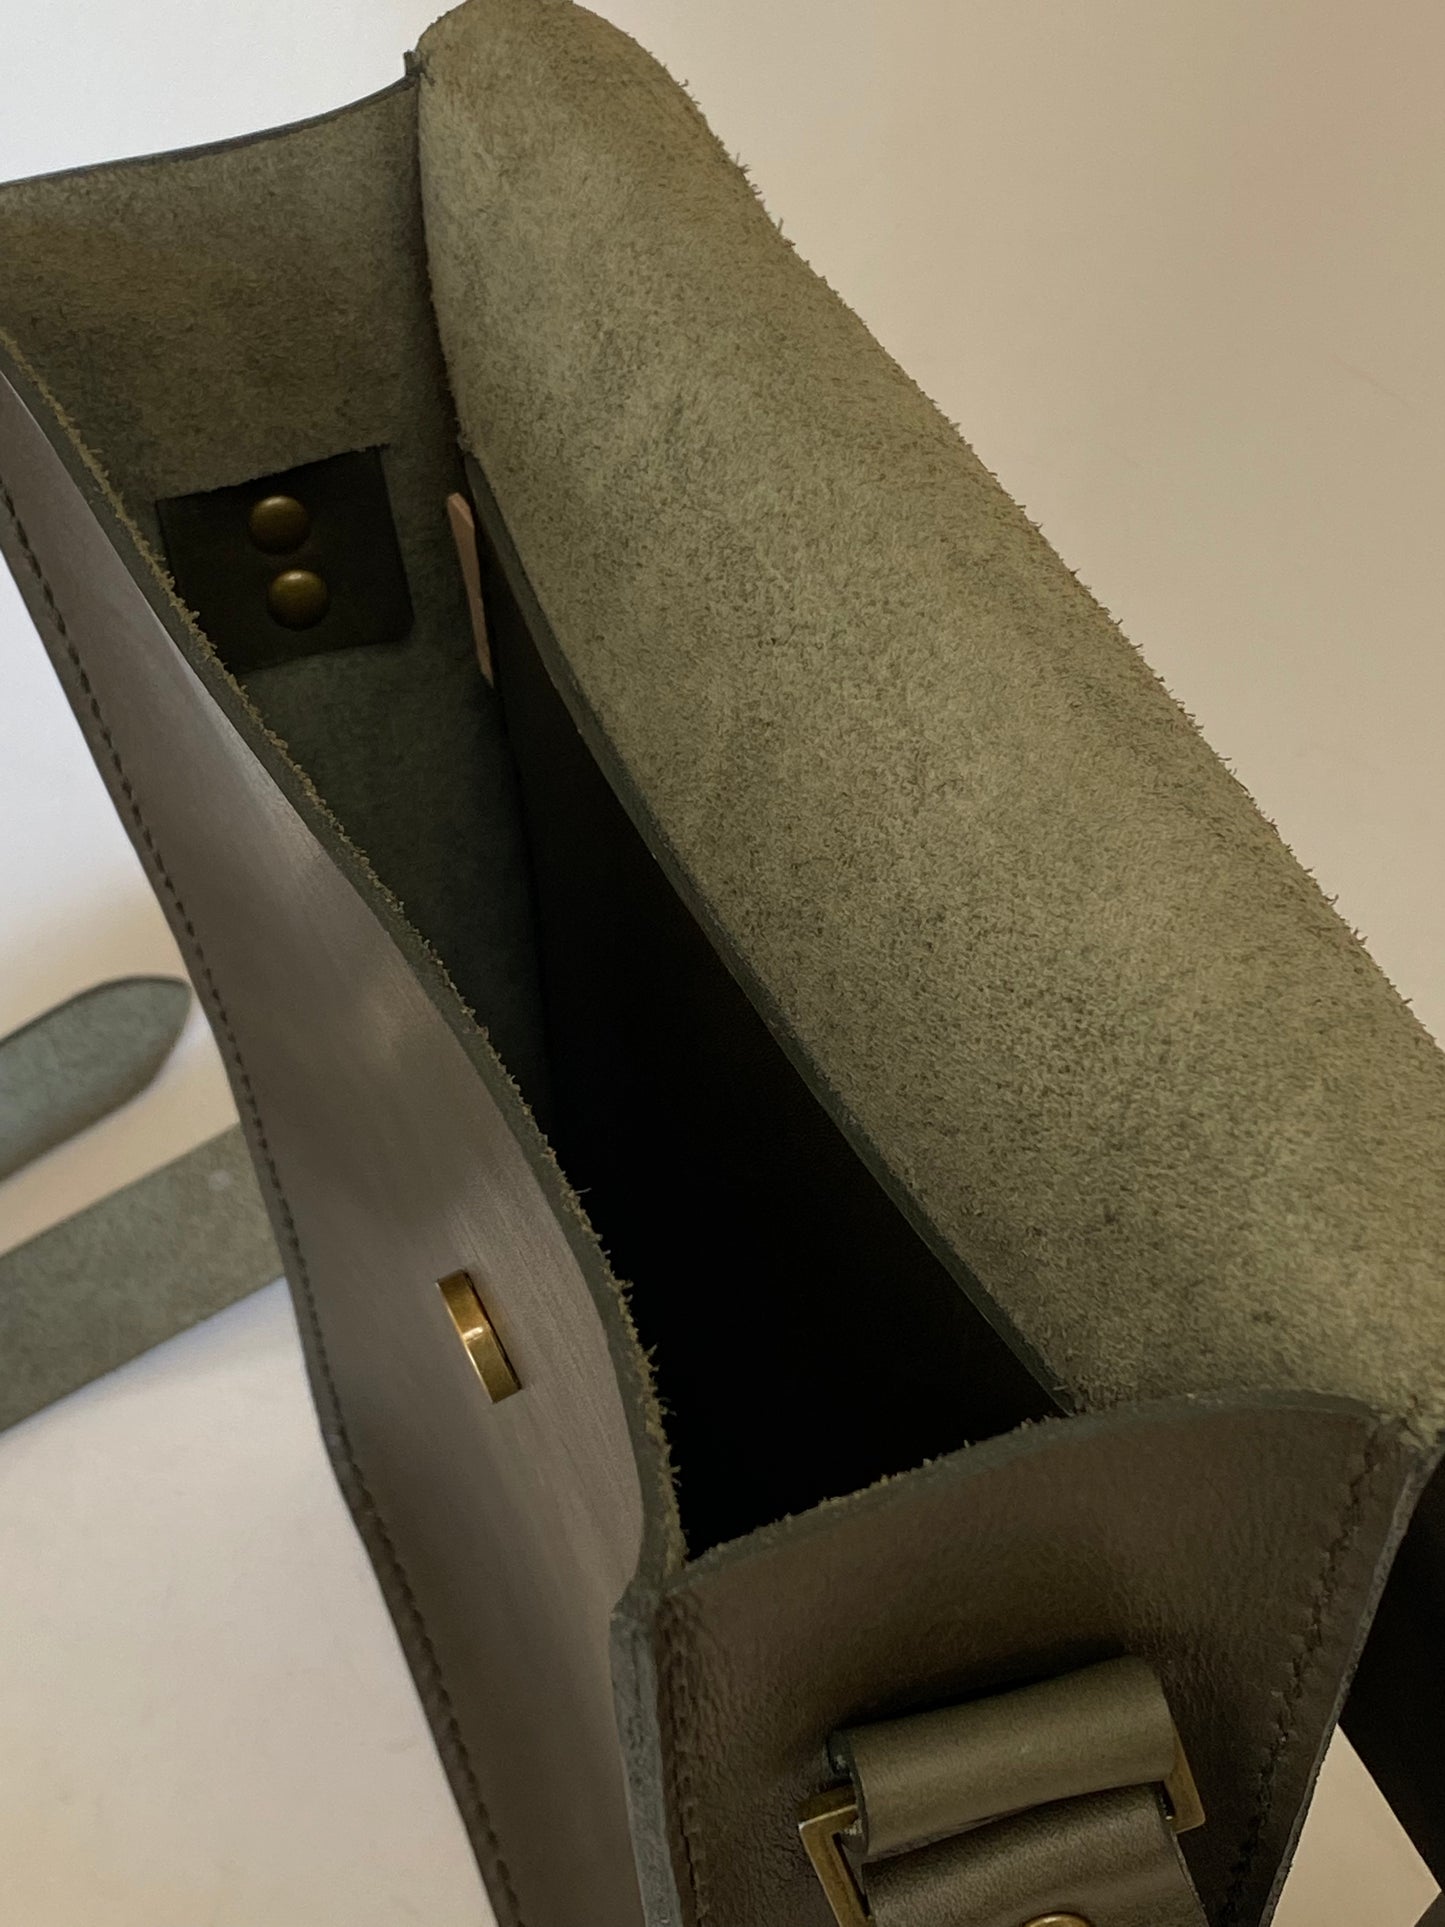 Sanna Leather Midi Contemporary Messenger Bag